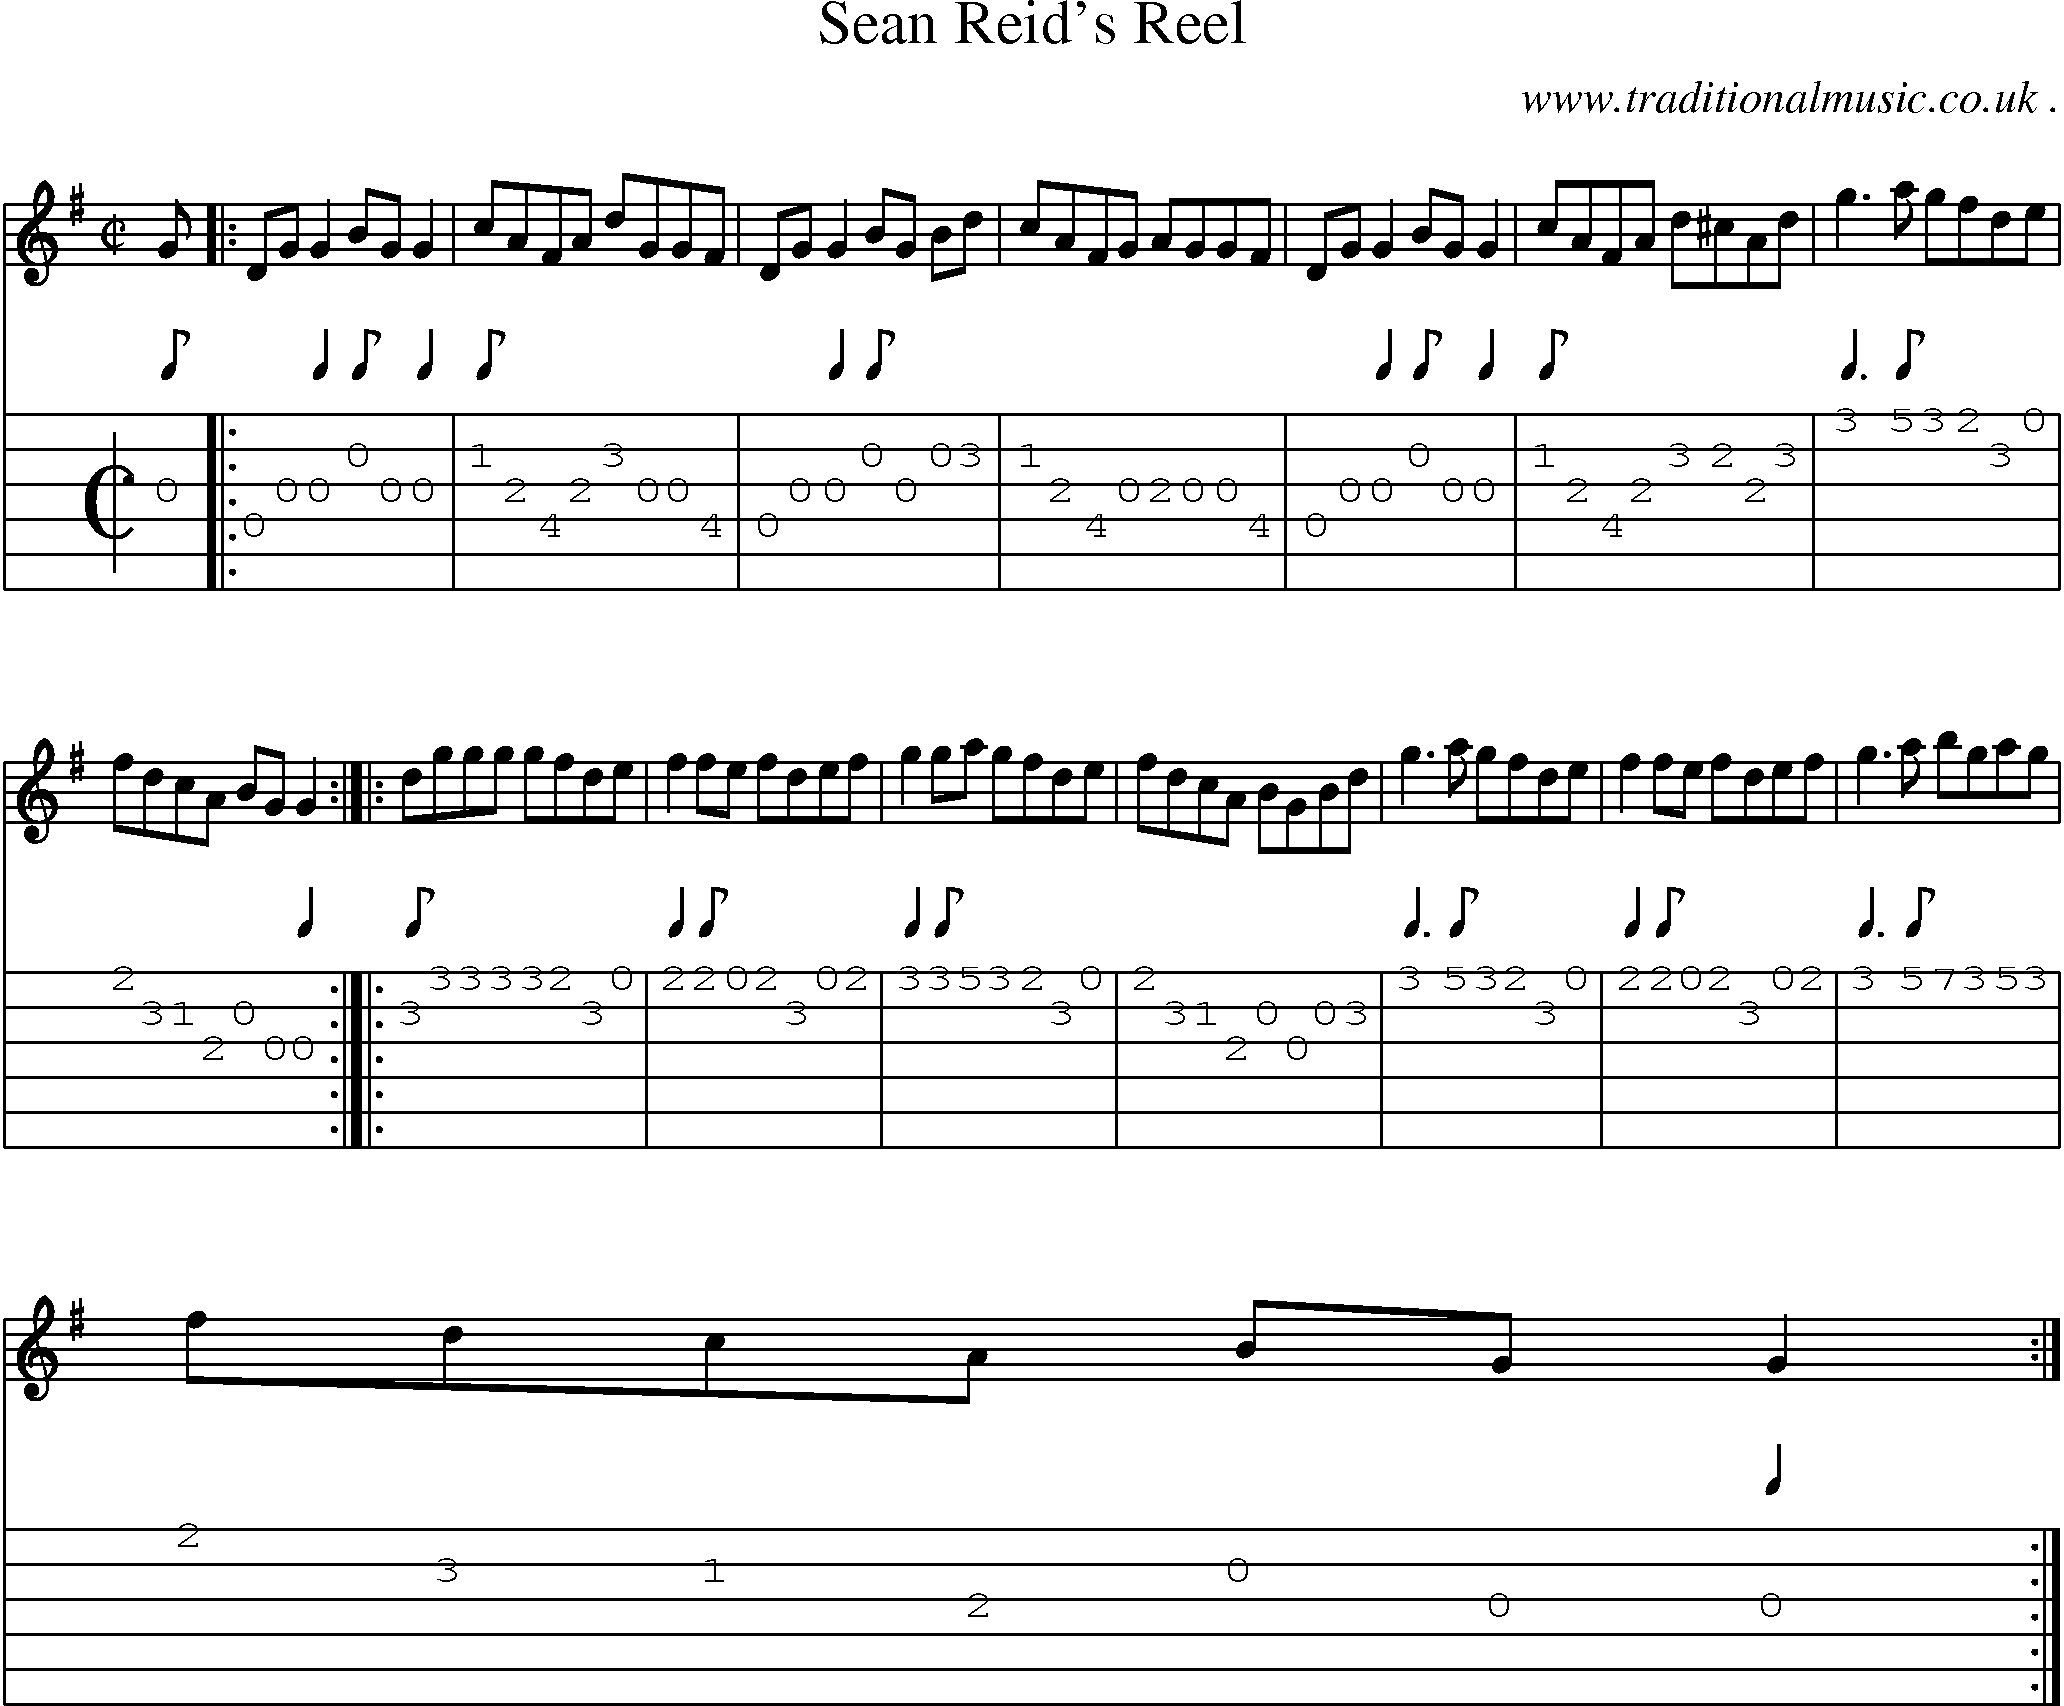 Sheet-Music and Guitar Tabs for Sean Reids Reel